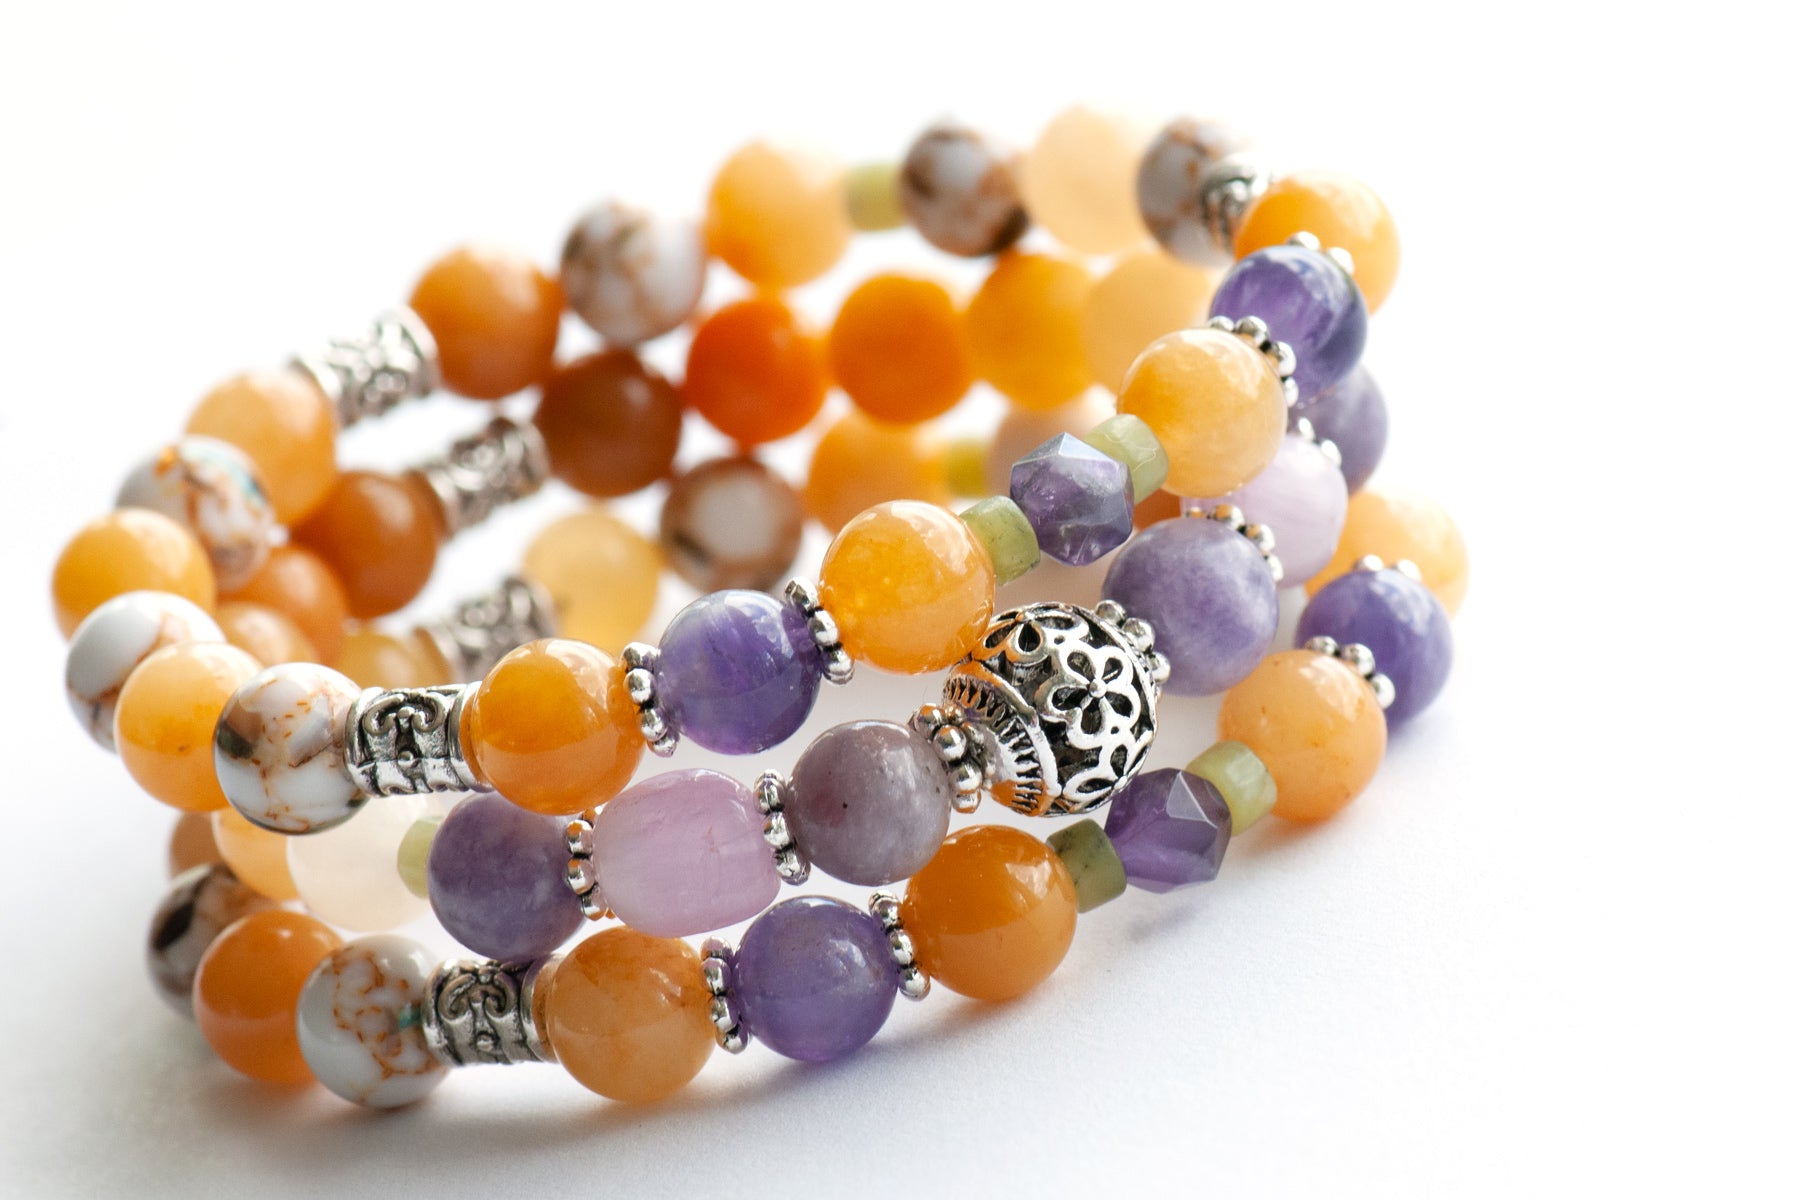 Lavender & Saffron gemstone bracelet handmade in New Brunswick Canada featuring Jade, Lepidolite, Kunzite and Amethyst